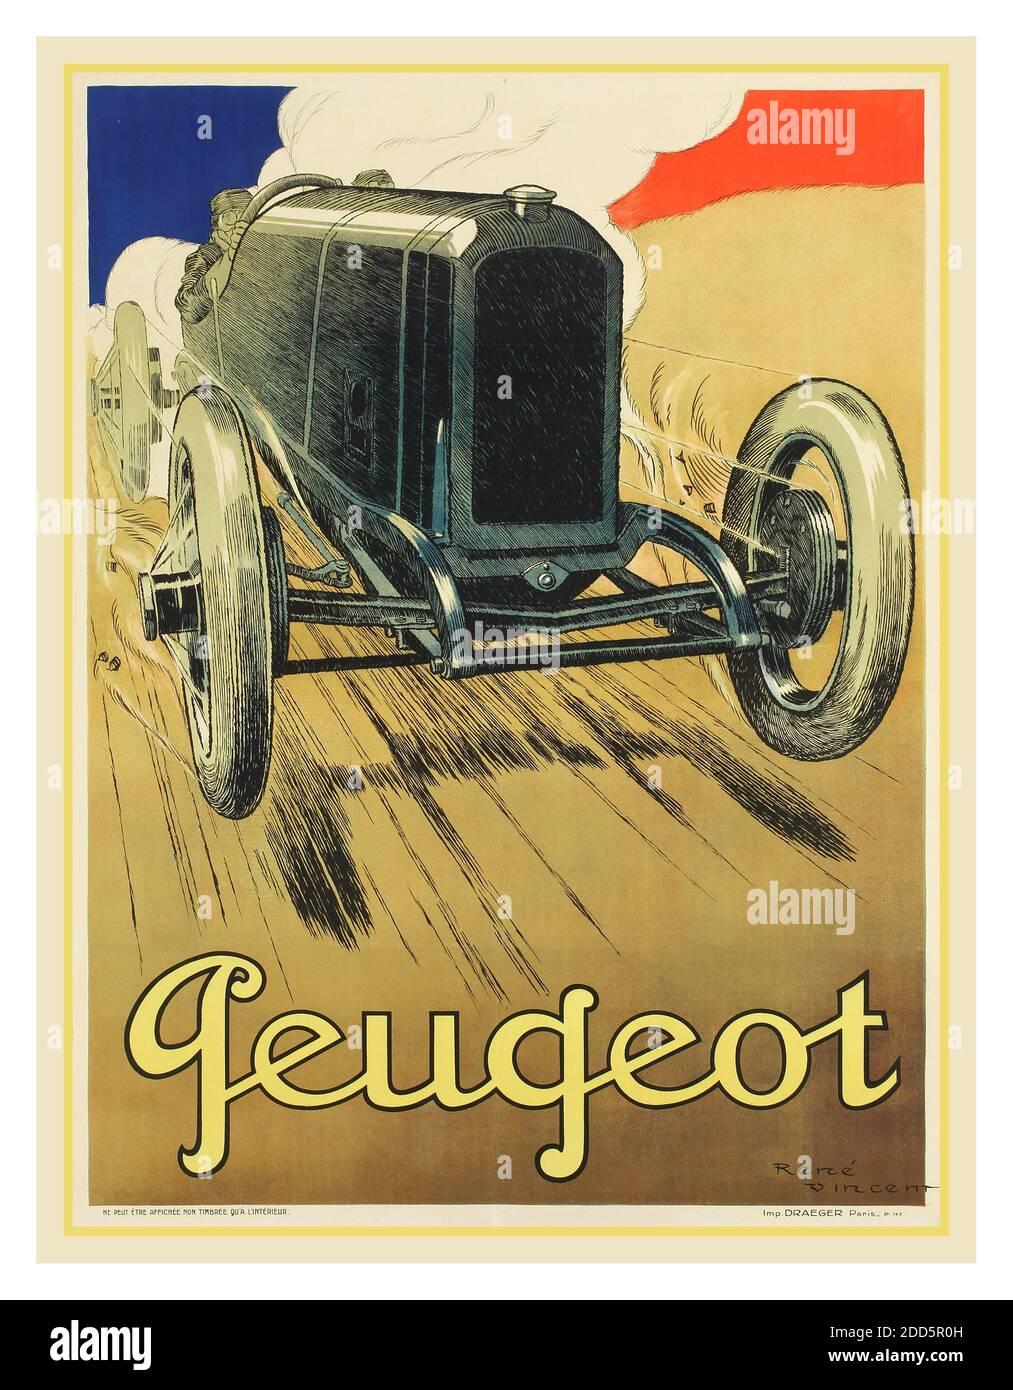 1900's Peugeot advertising poster original poster printed by Imp. Draegar, Paris 1912  by René Vincent (1879-1936) Stock Photo